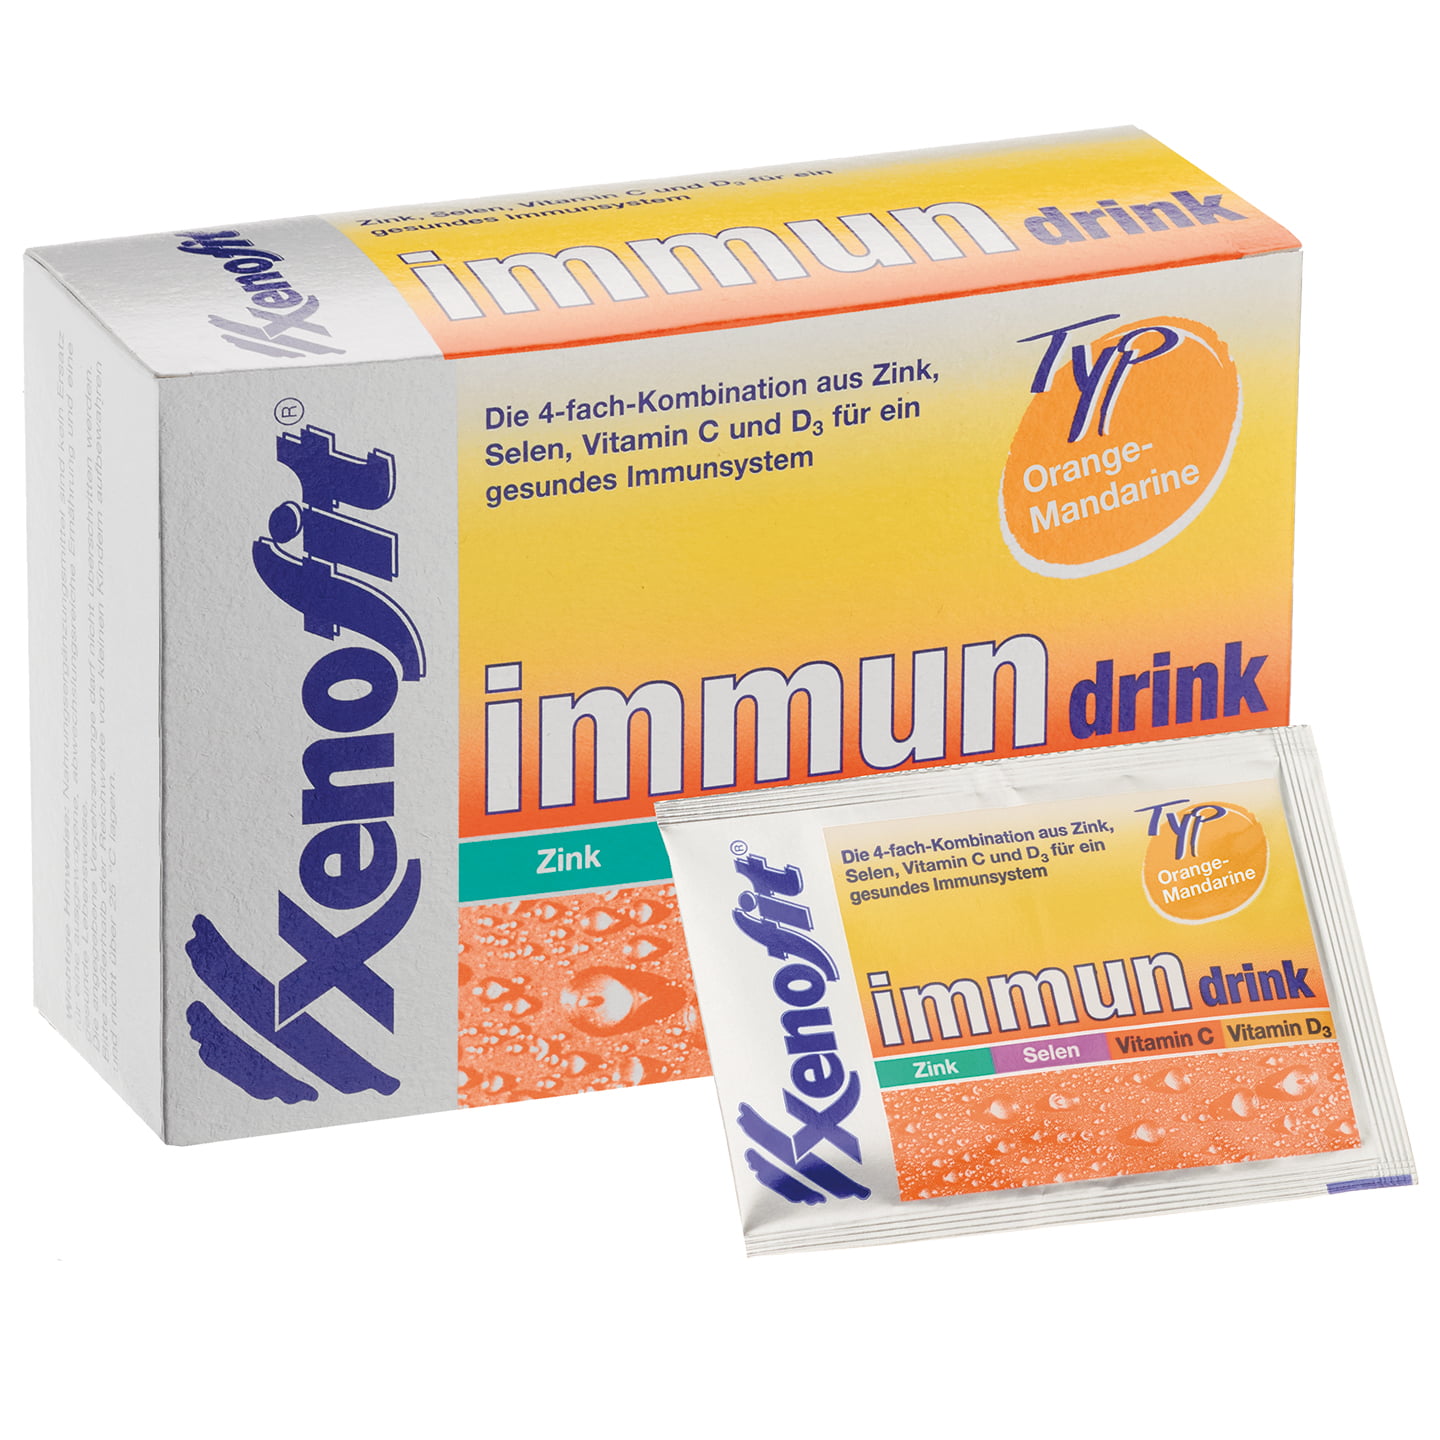 XENOFIT immun drink, Power drink, Sports food